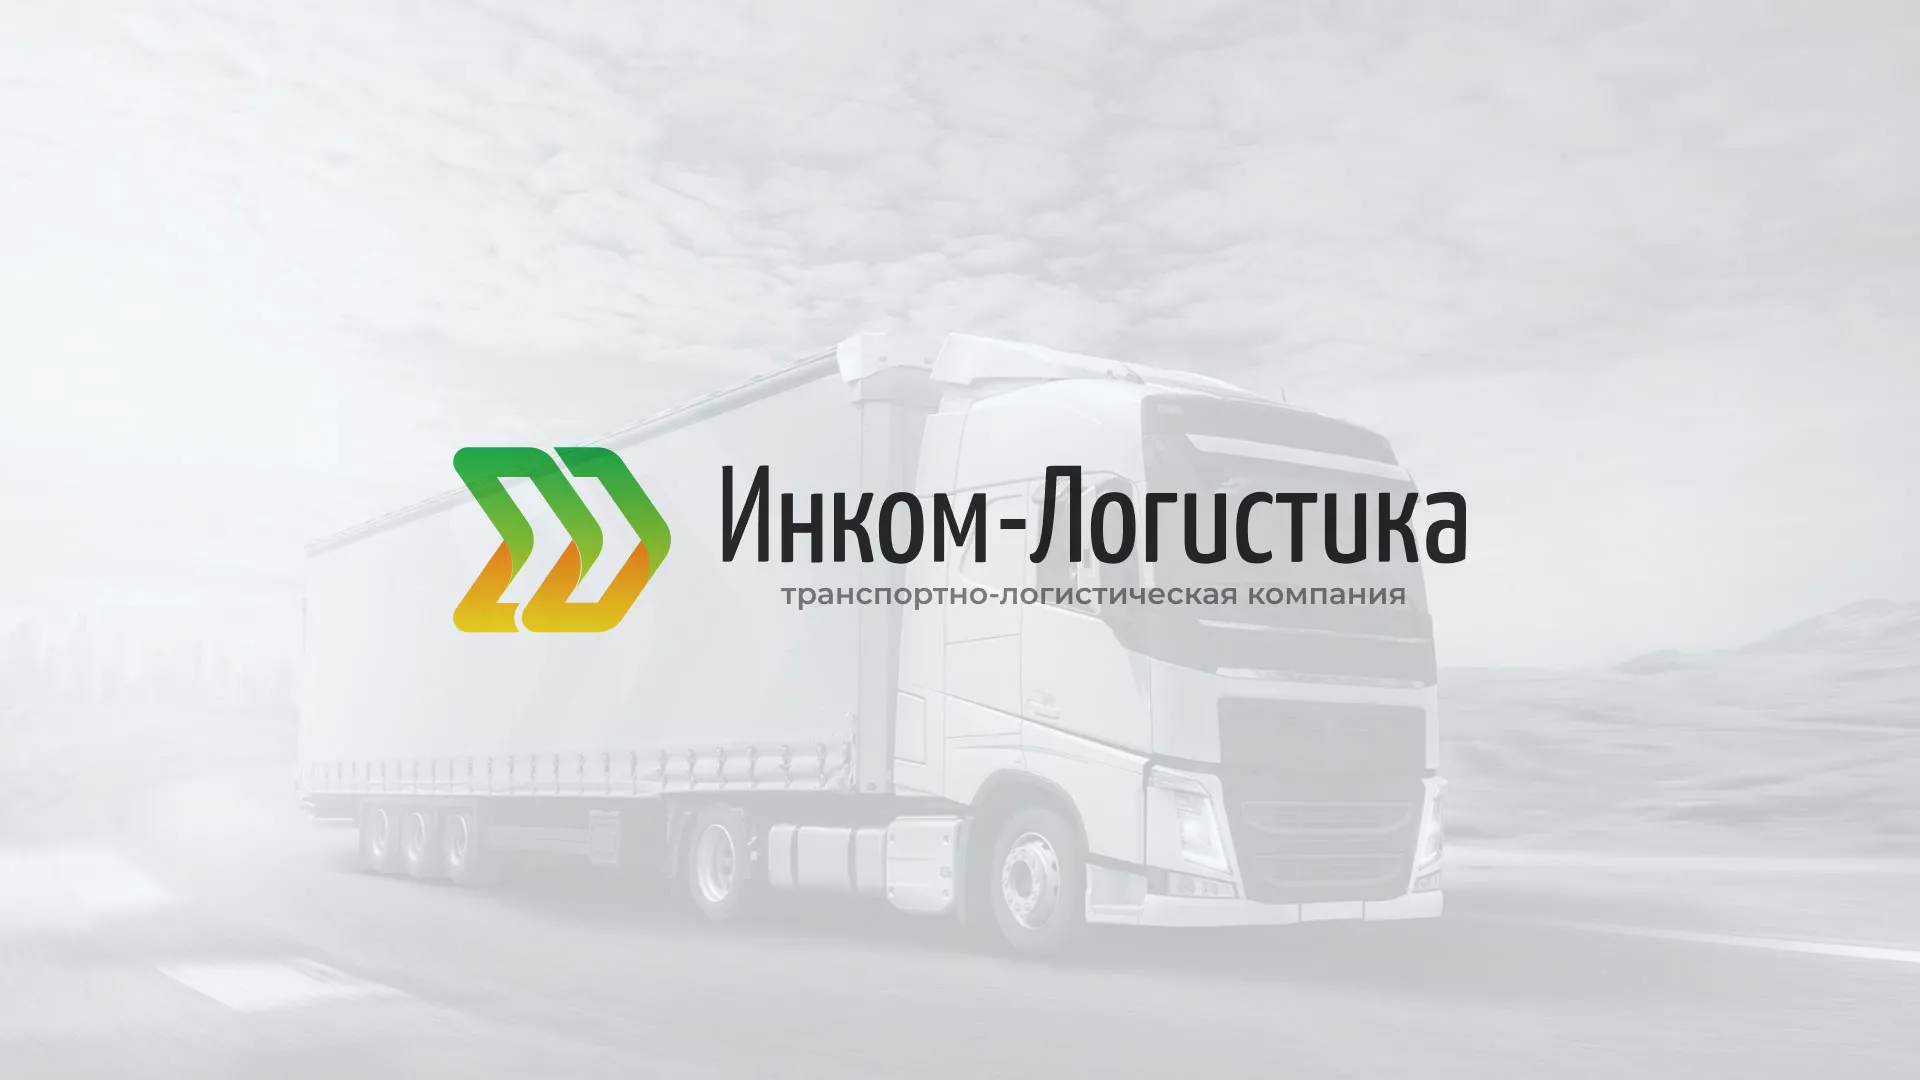 Разработка логотипа и сайта компании «Инком-Логистика» в Райчихинске